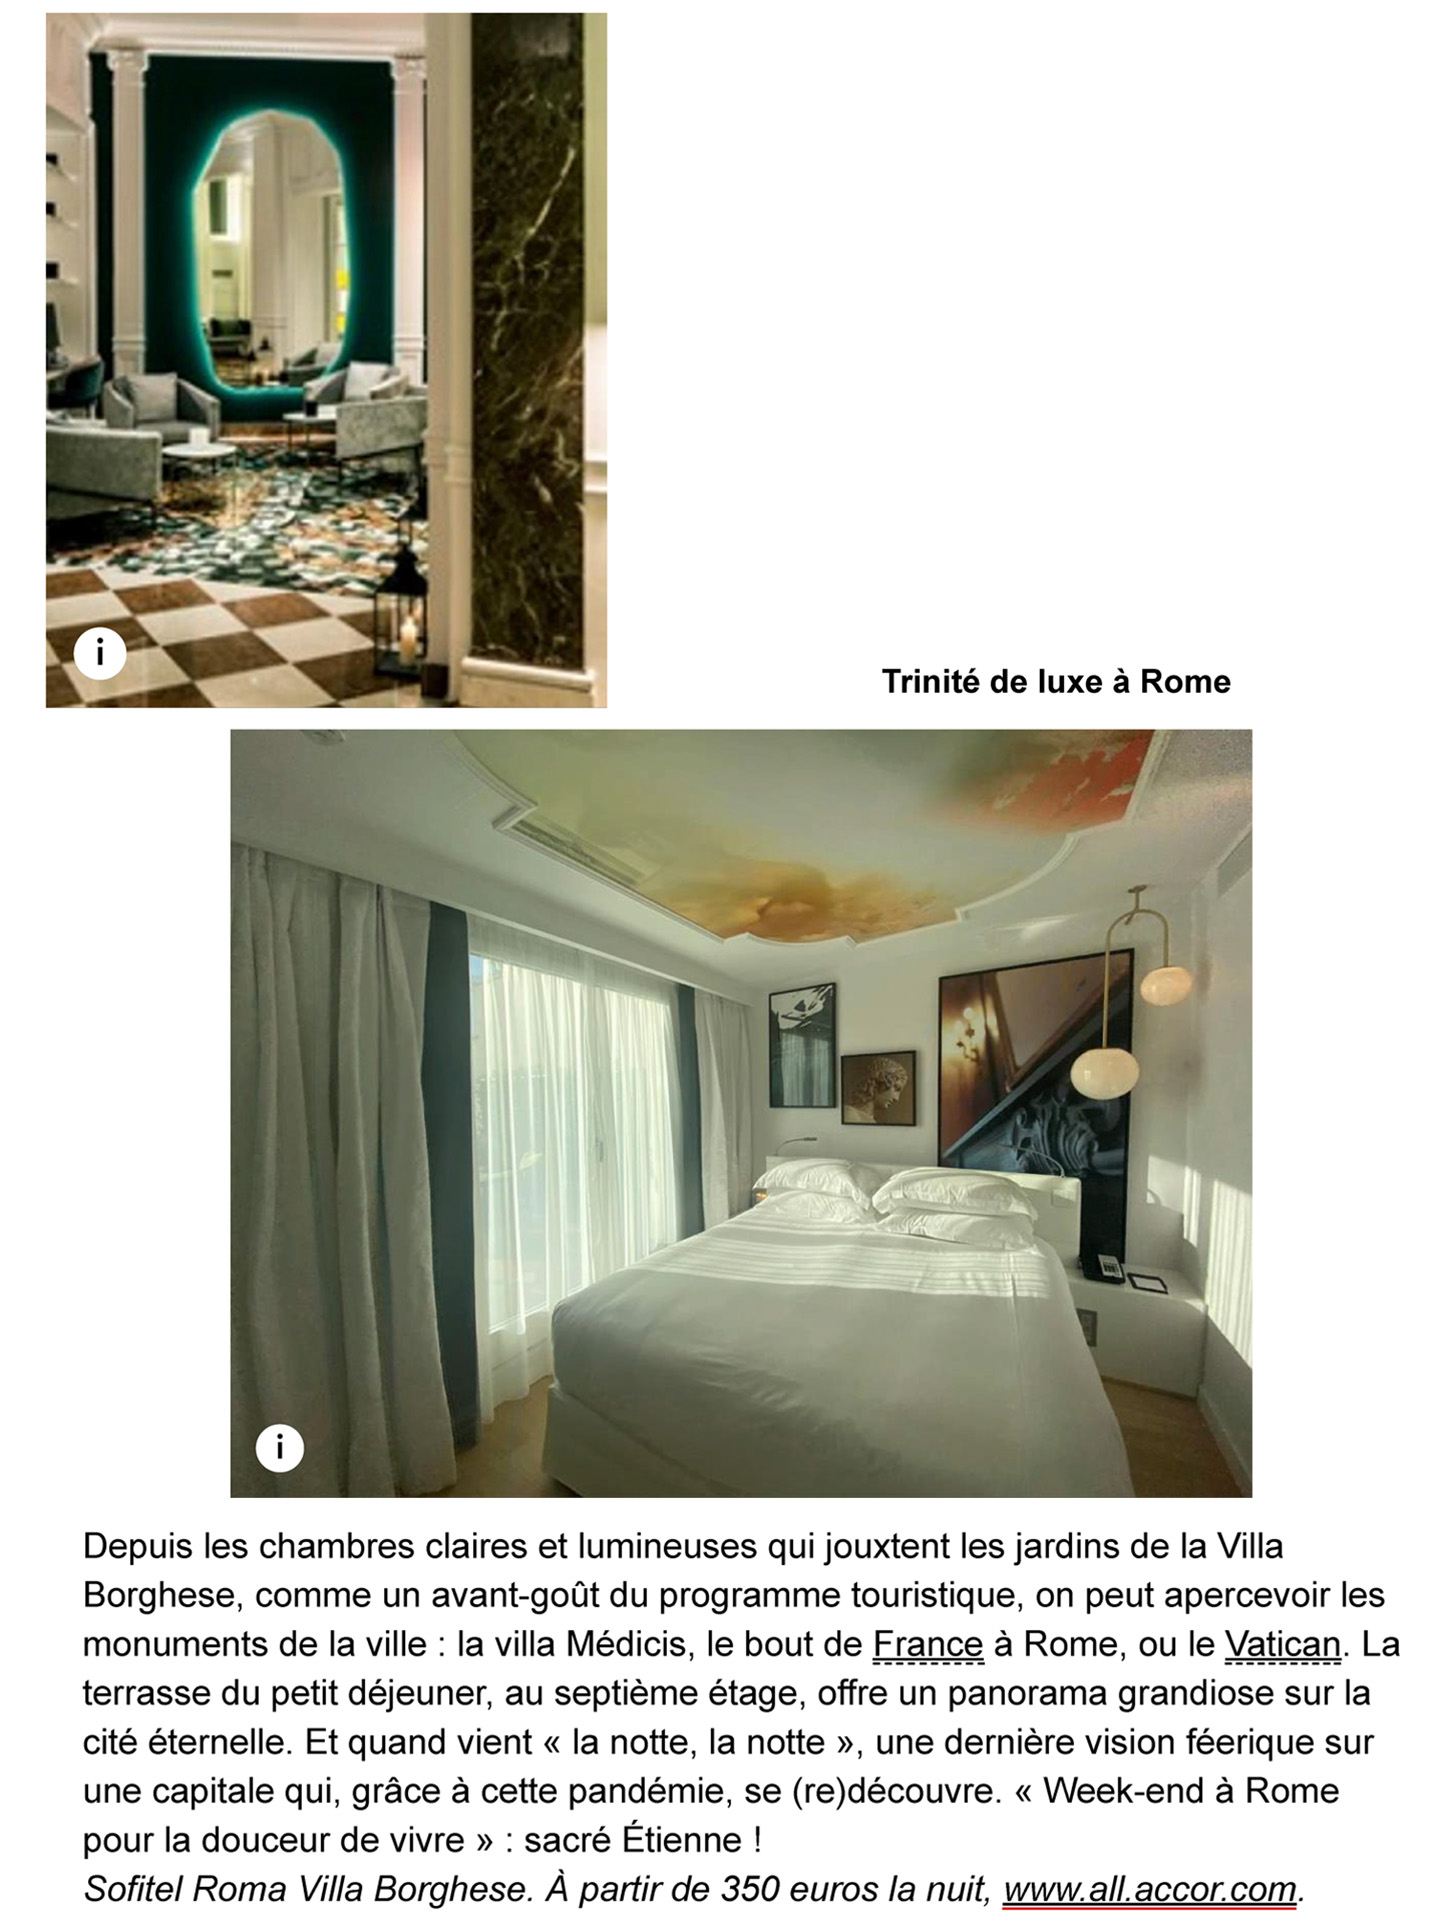 Article on the hotel sofitel rome villa borghese realized by the studio jean-philippe nuel in the magazine le point, press, luxury hotel, interior design, interior decoration, hotel italient